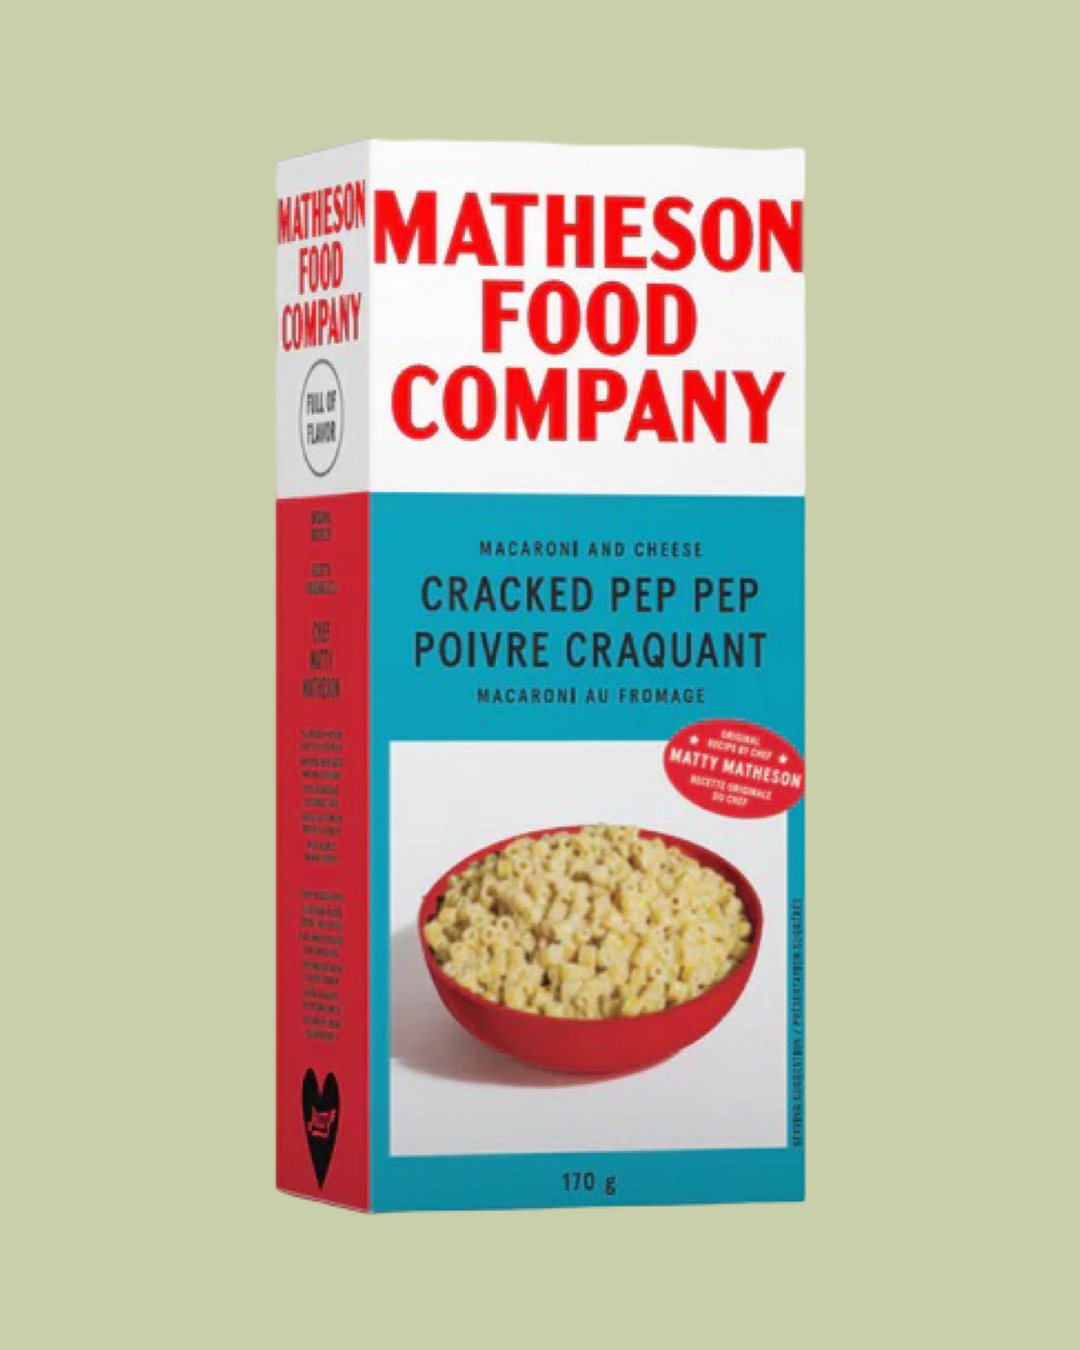 Matheson Macaroni and Cheese Cracked Pep Pep